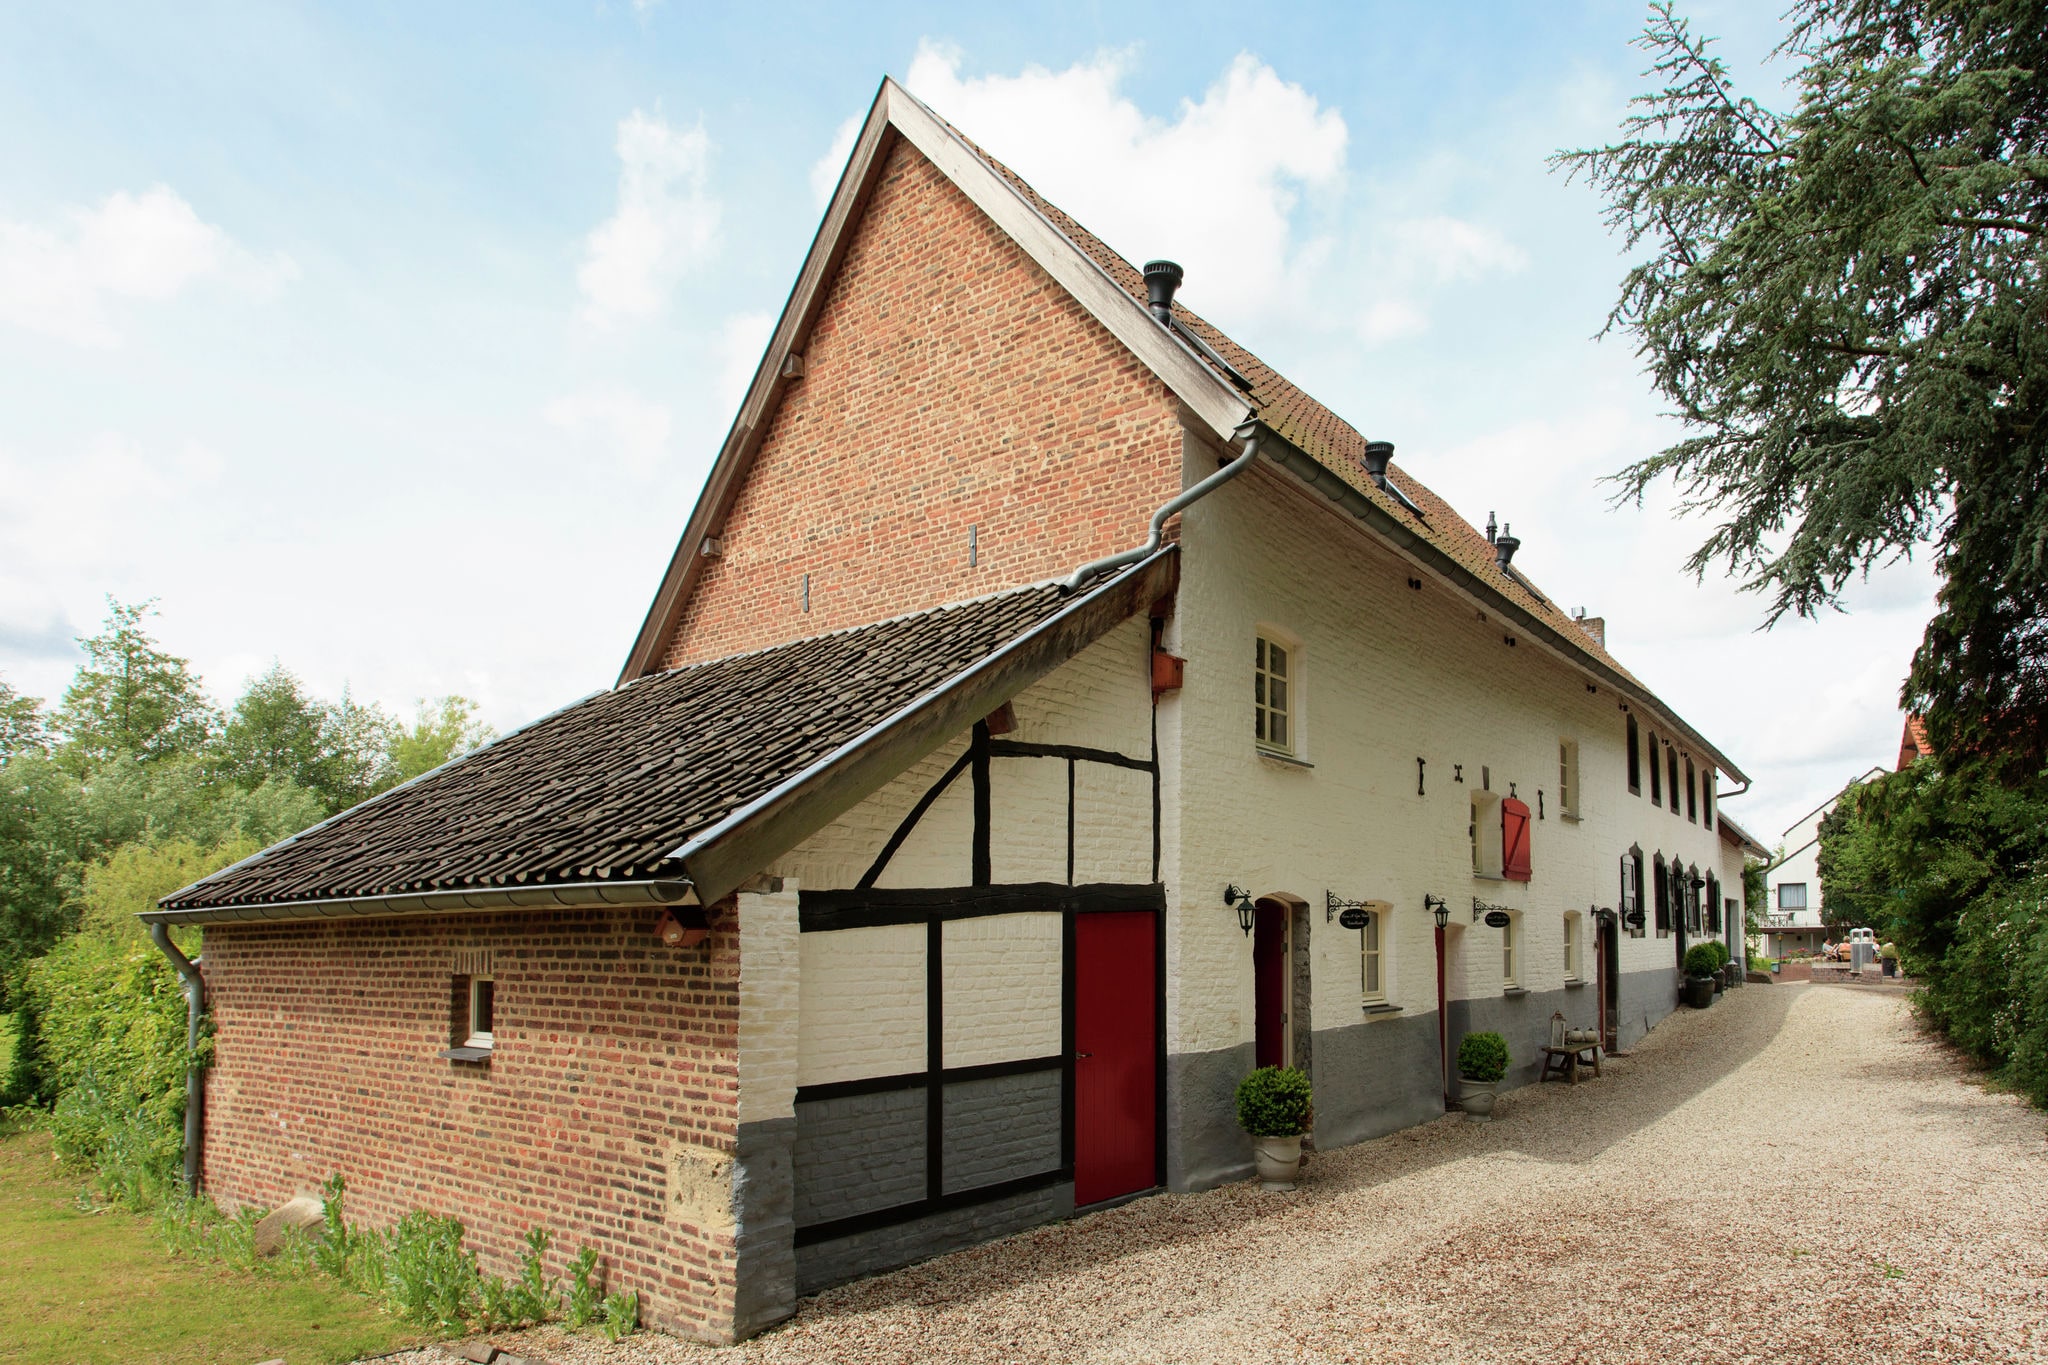 Cosy holiday homes in Slenaken, South Limburg